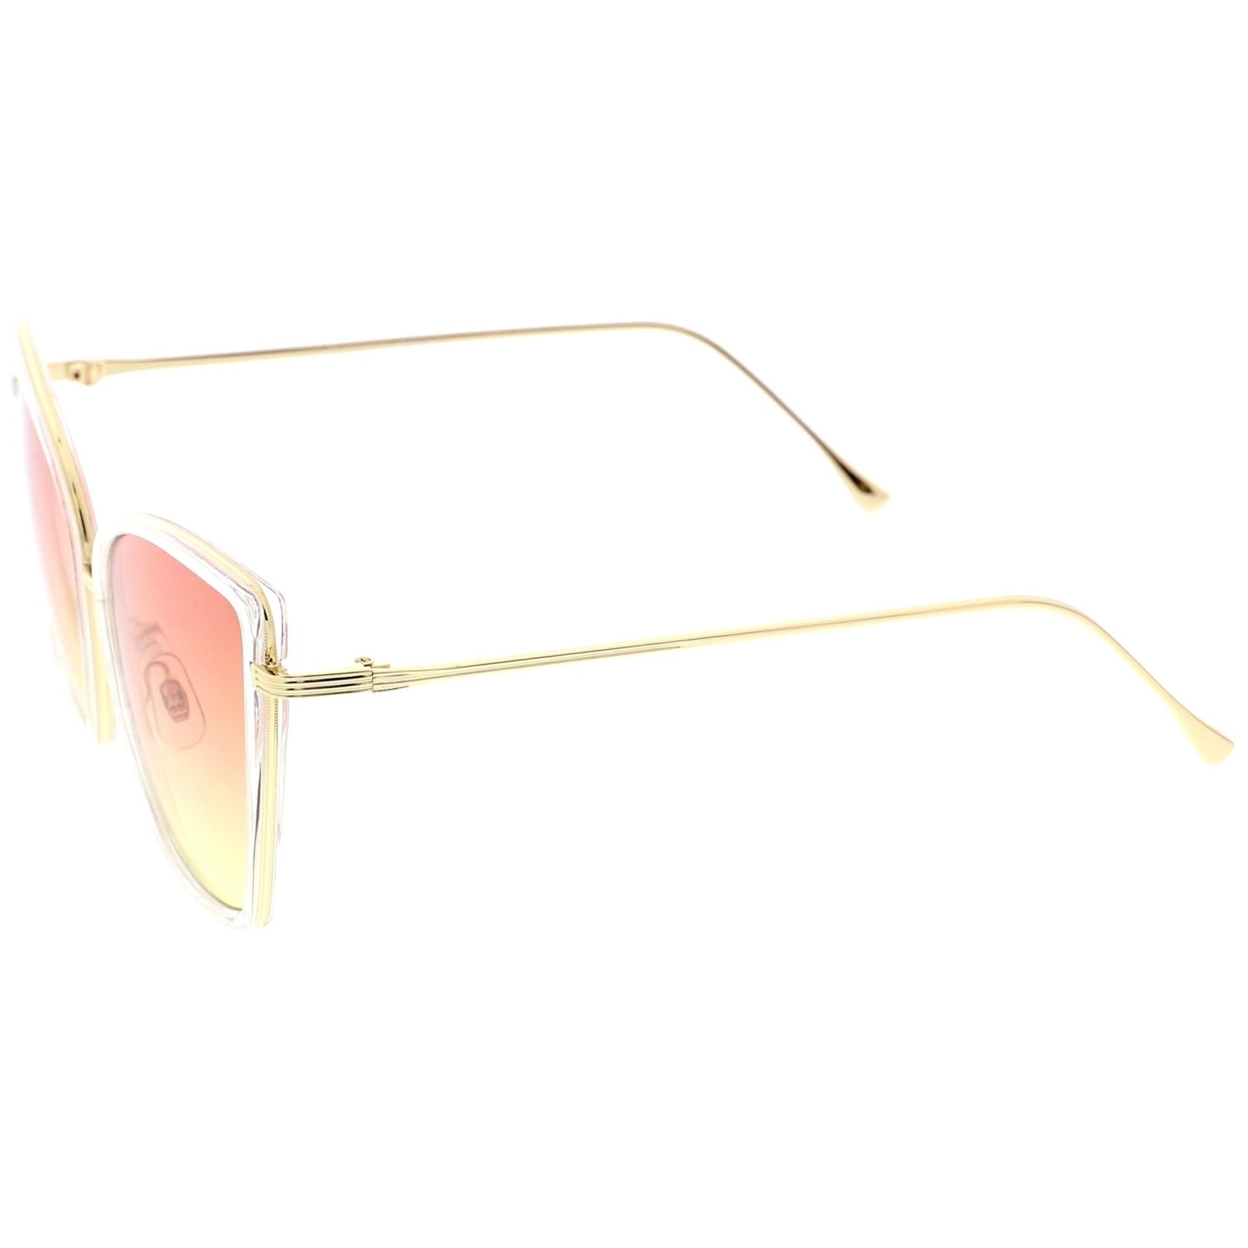 Women's Oversize Cat Eye Sunglasses With Slim Arms Colored Gradient Lens 56mm - Black Gold / Purple Blue